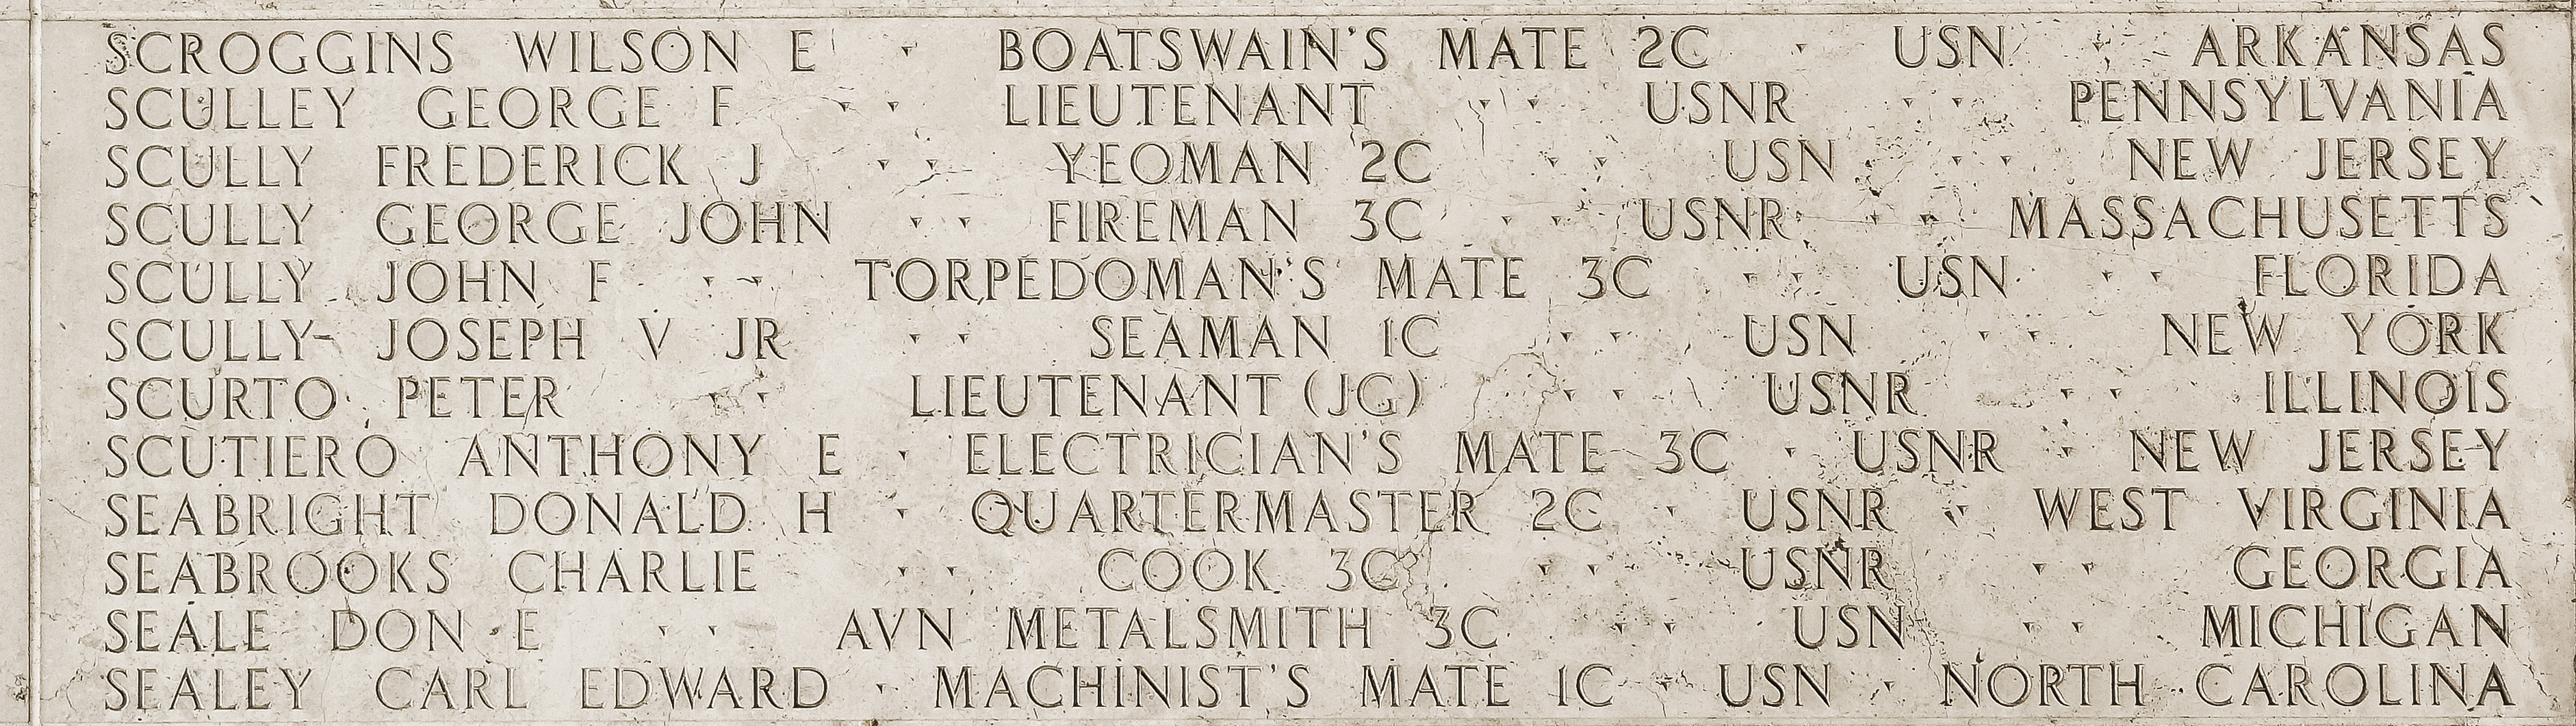 Wilson E. Scroggins, Boatswain's Mate Second Class